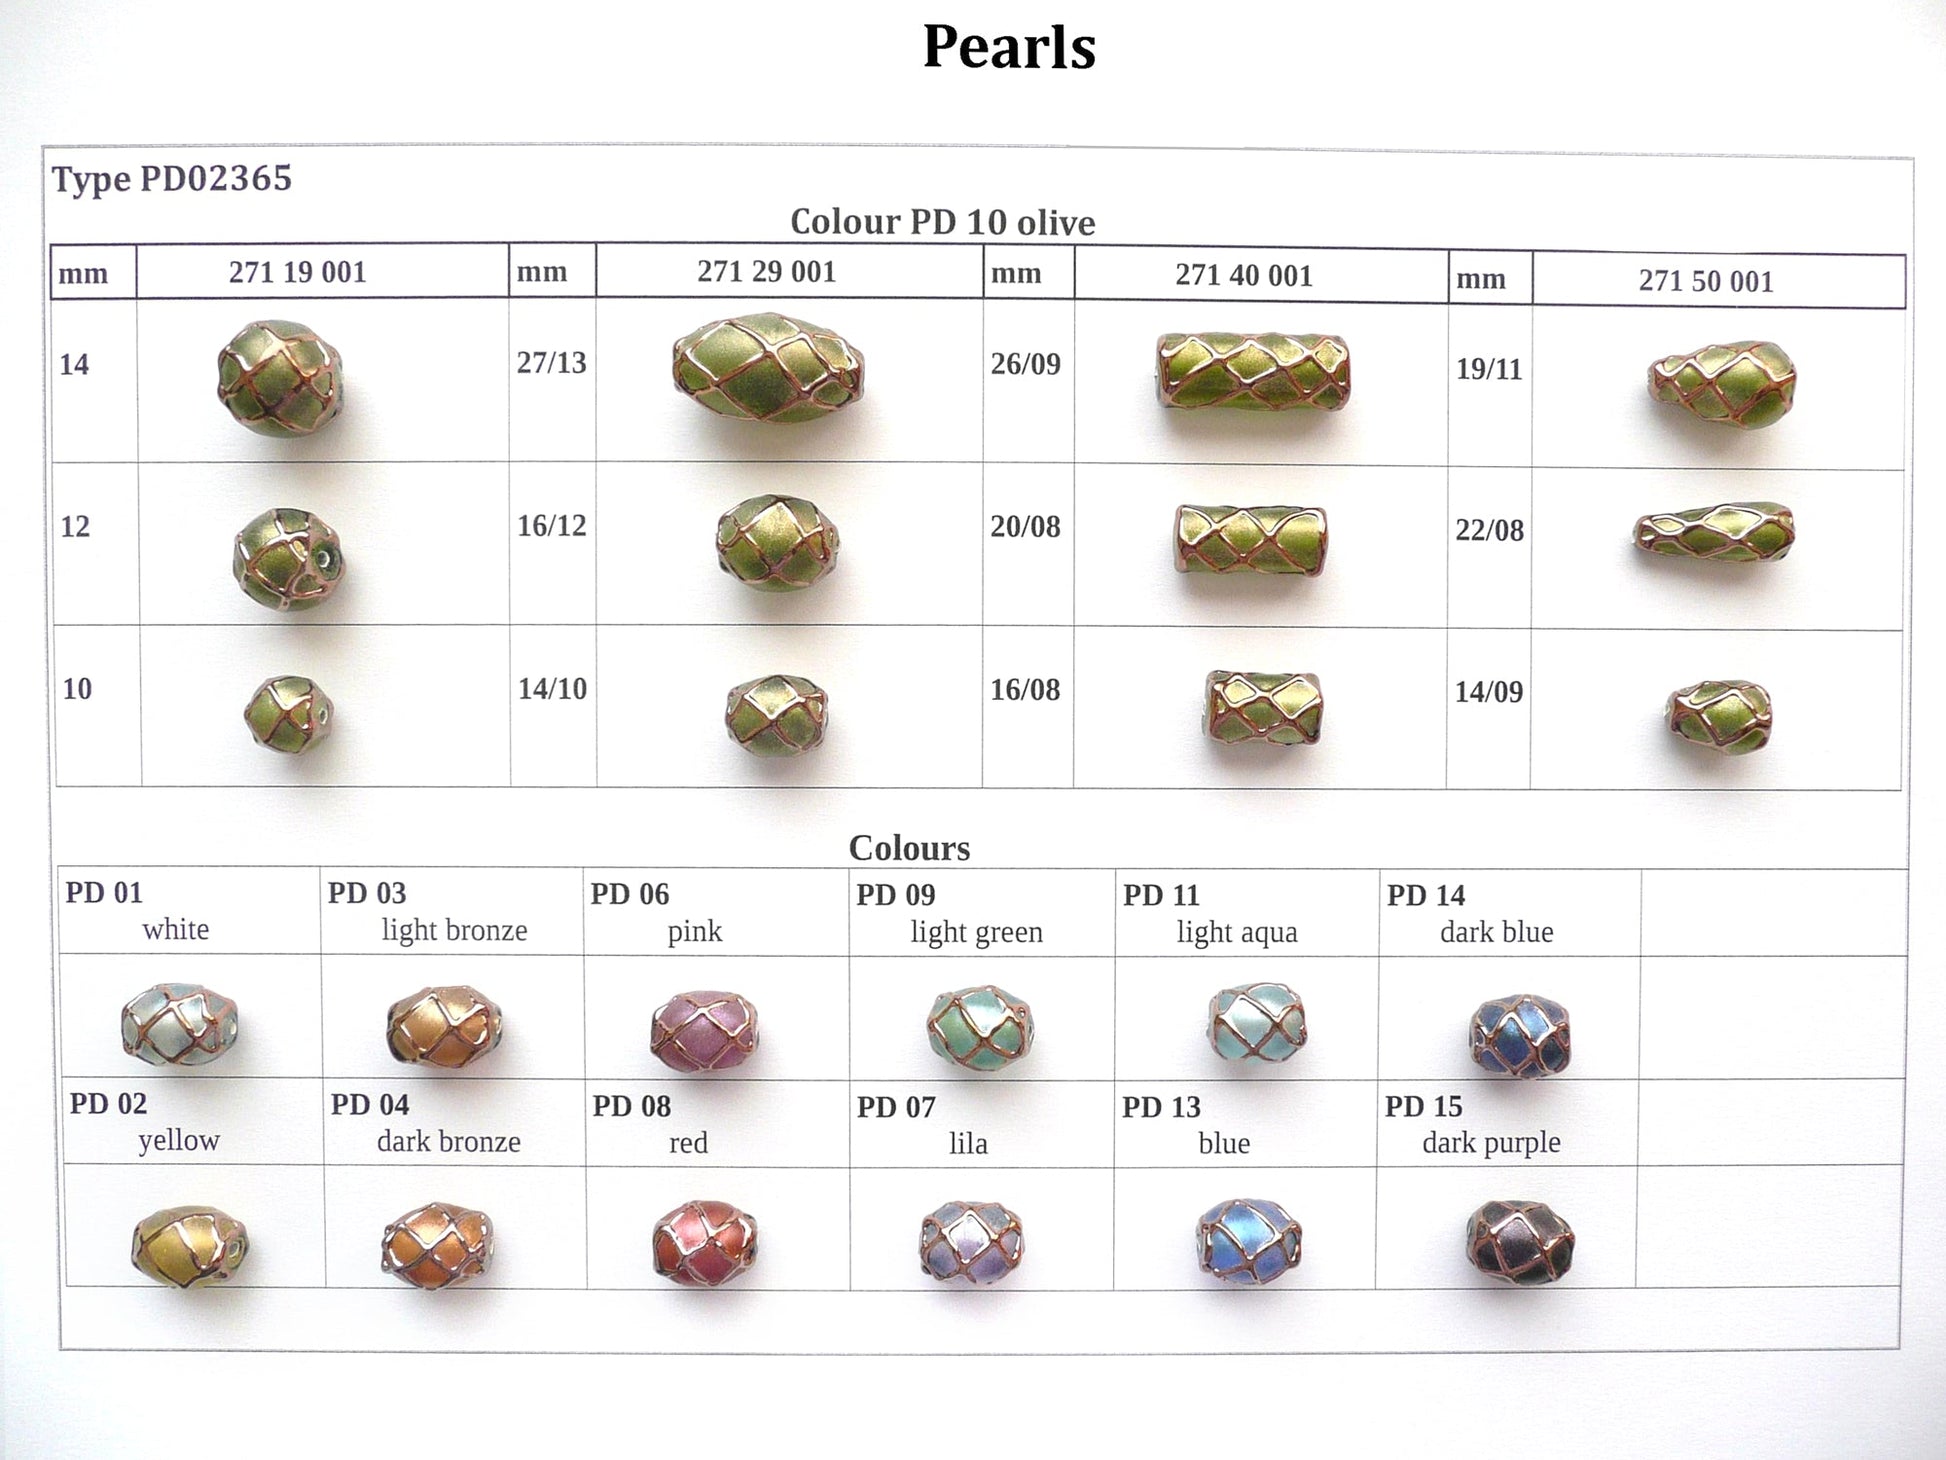 30 pcs Lampwork Beads Pearl Decor PD2365 / Teardrop/Pear (271-50-001), Handmade, Preciosa Glass, Czech Republic